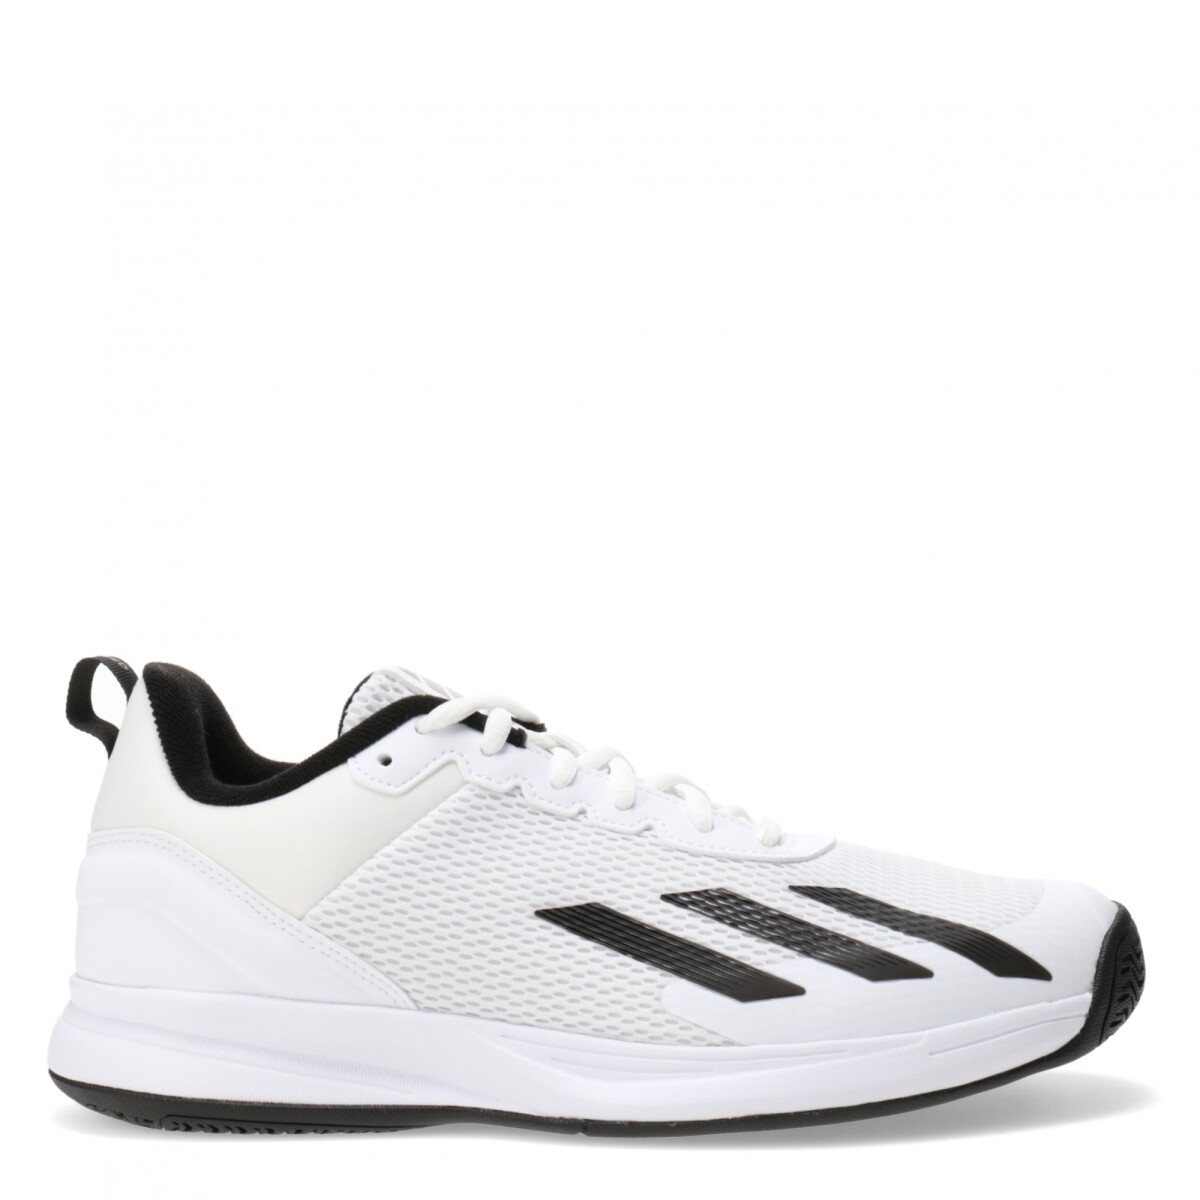 Court Flash Speed Adidas - Blanco/Negro 